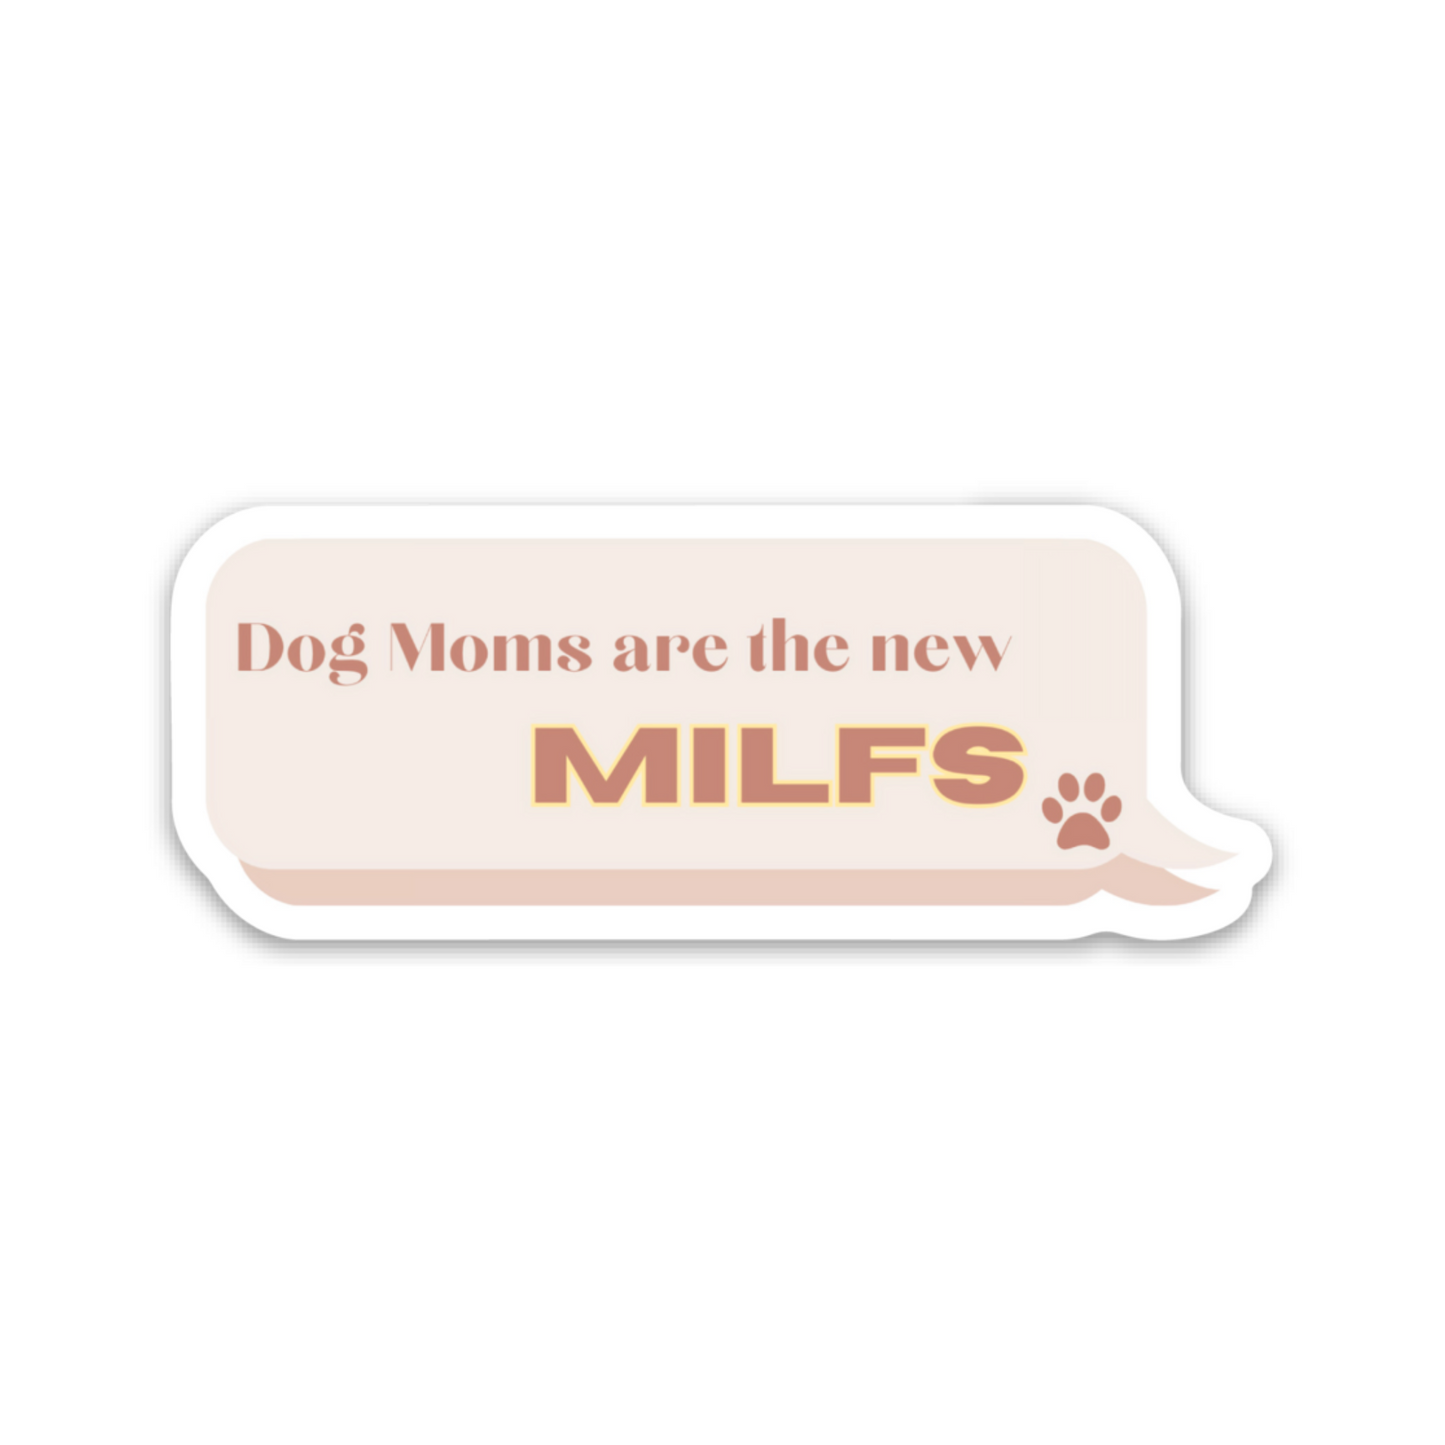 Dog Moms are the new MILFS Vinyl Sticker